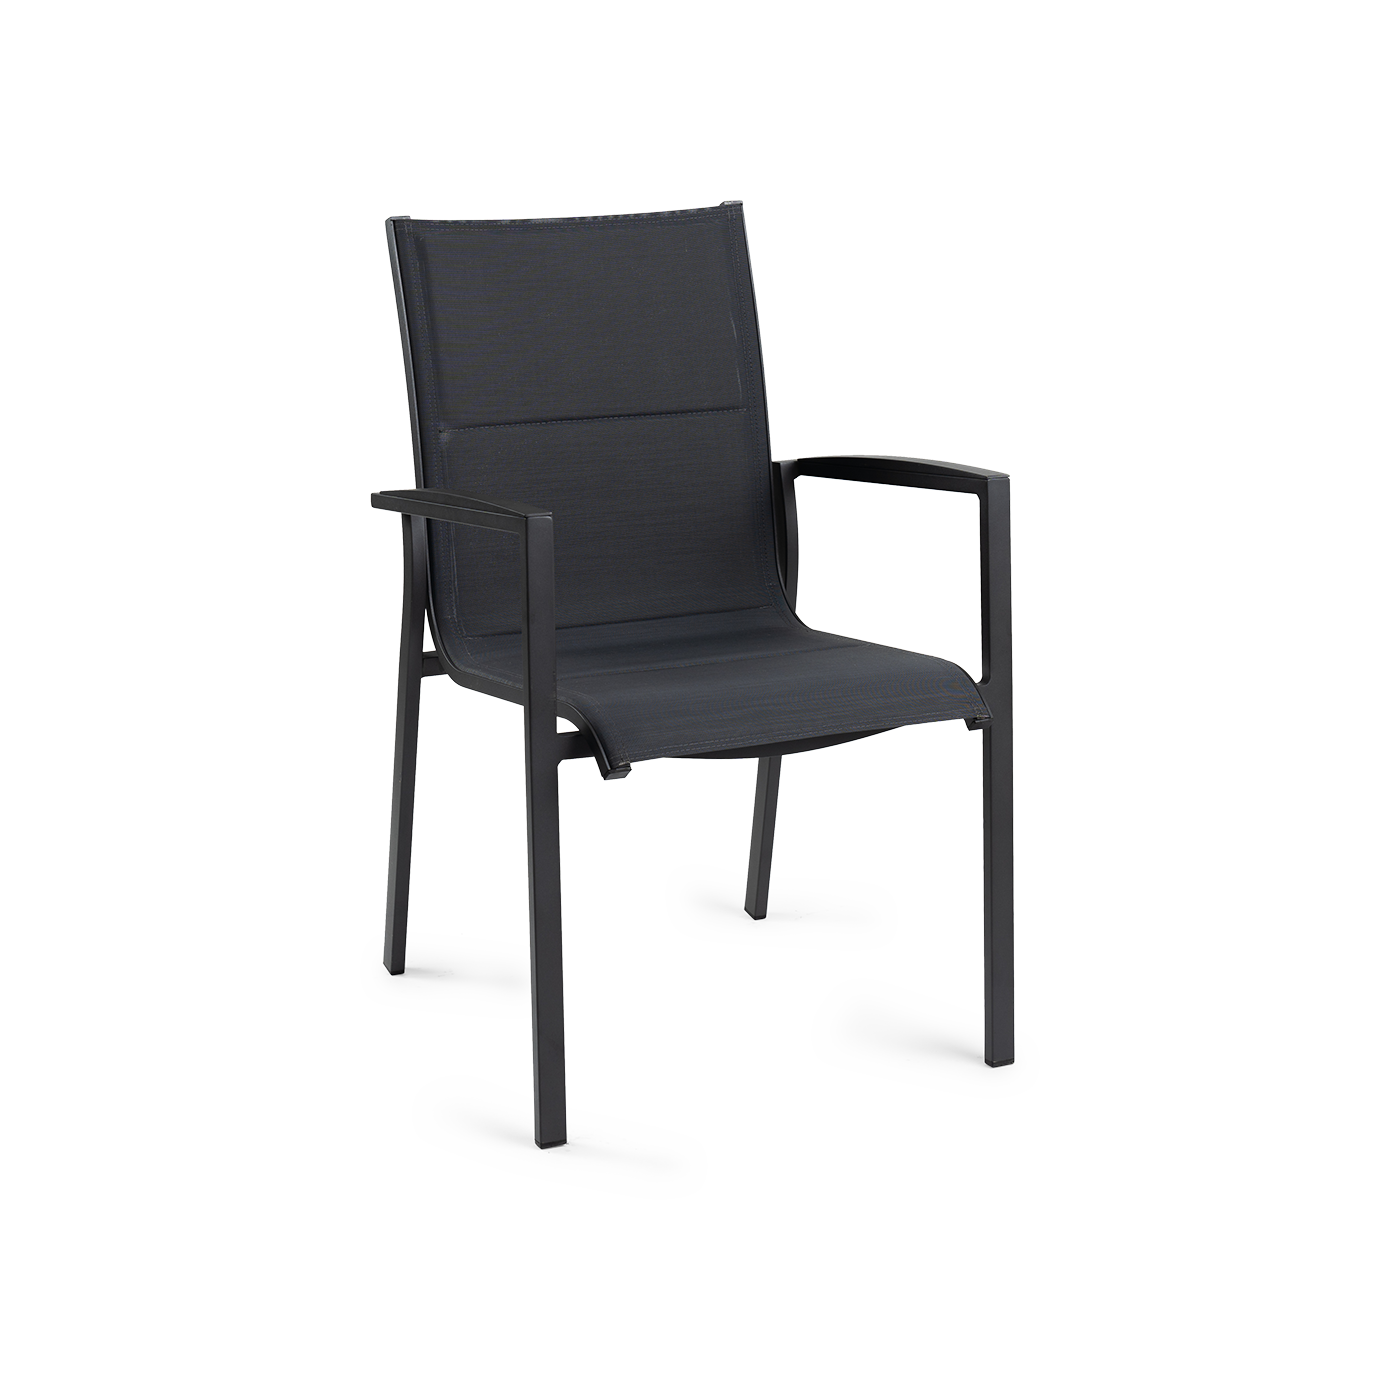 Foxx Alu Stackable Chair Charcoal